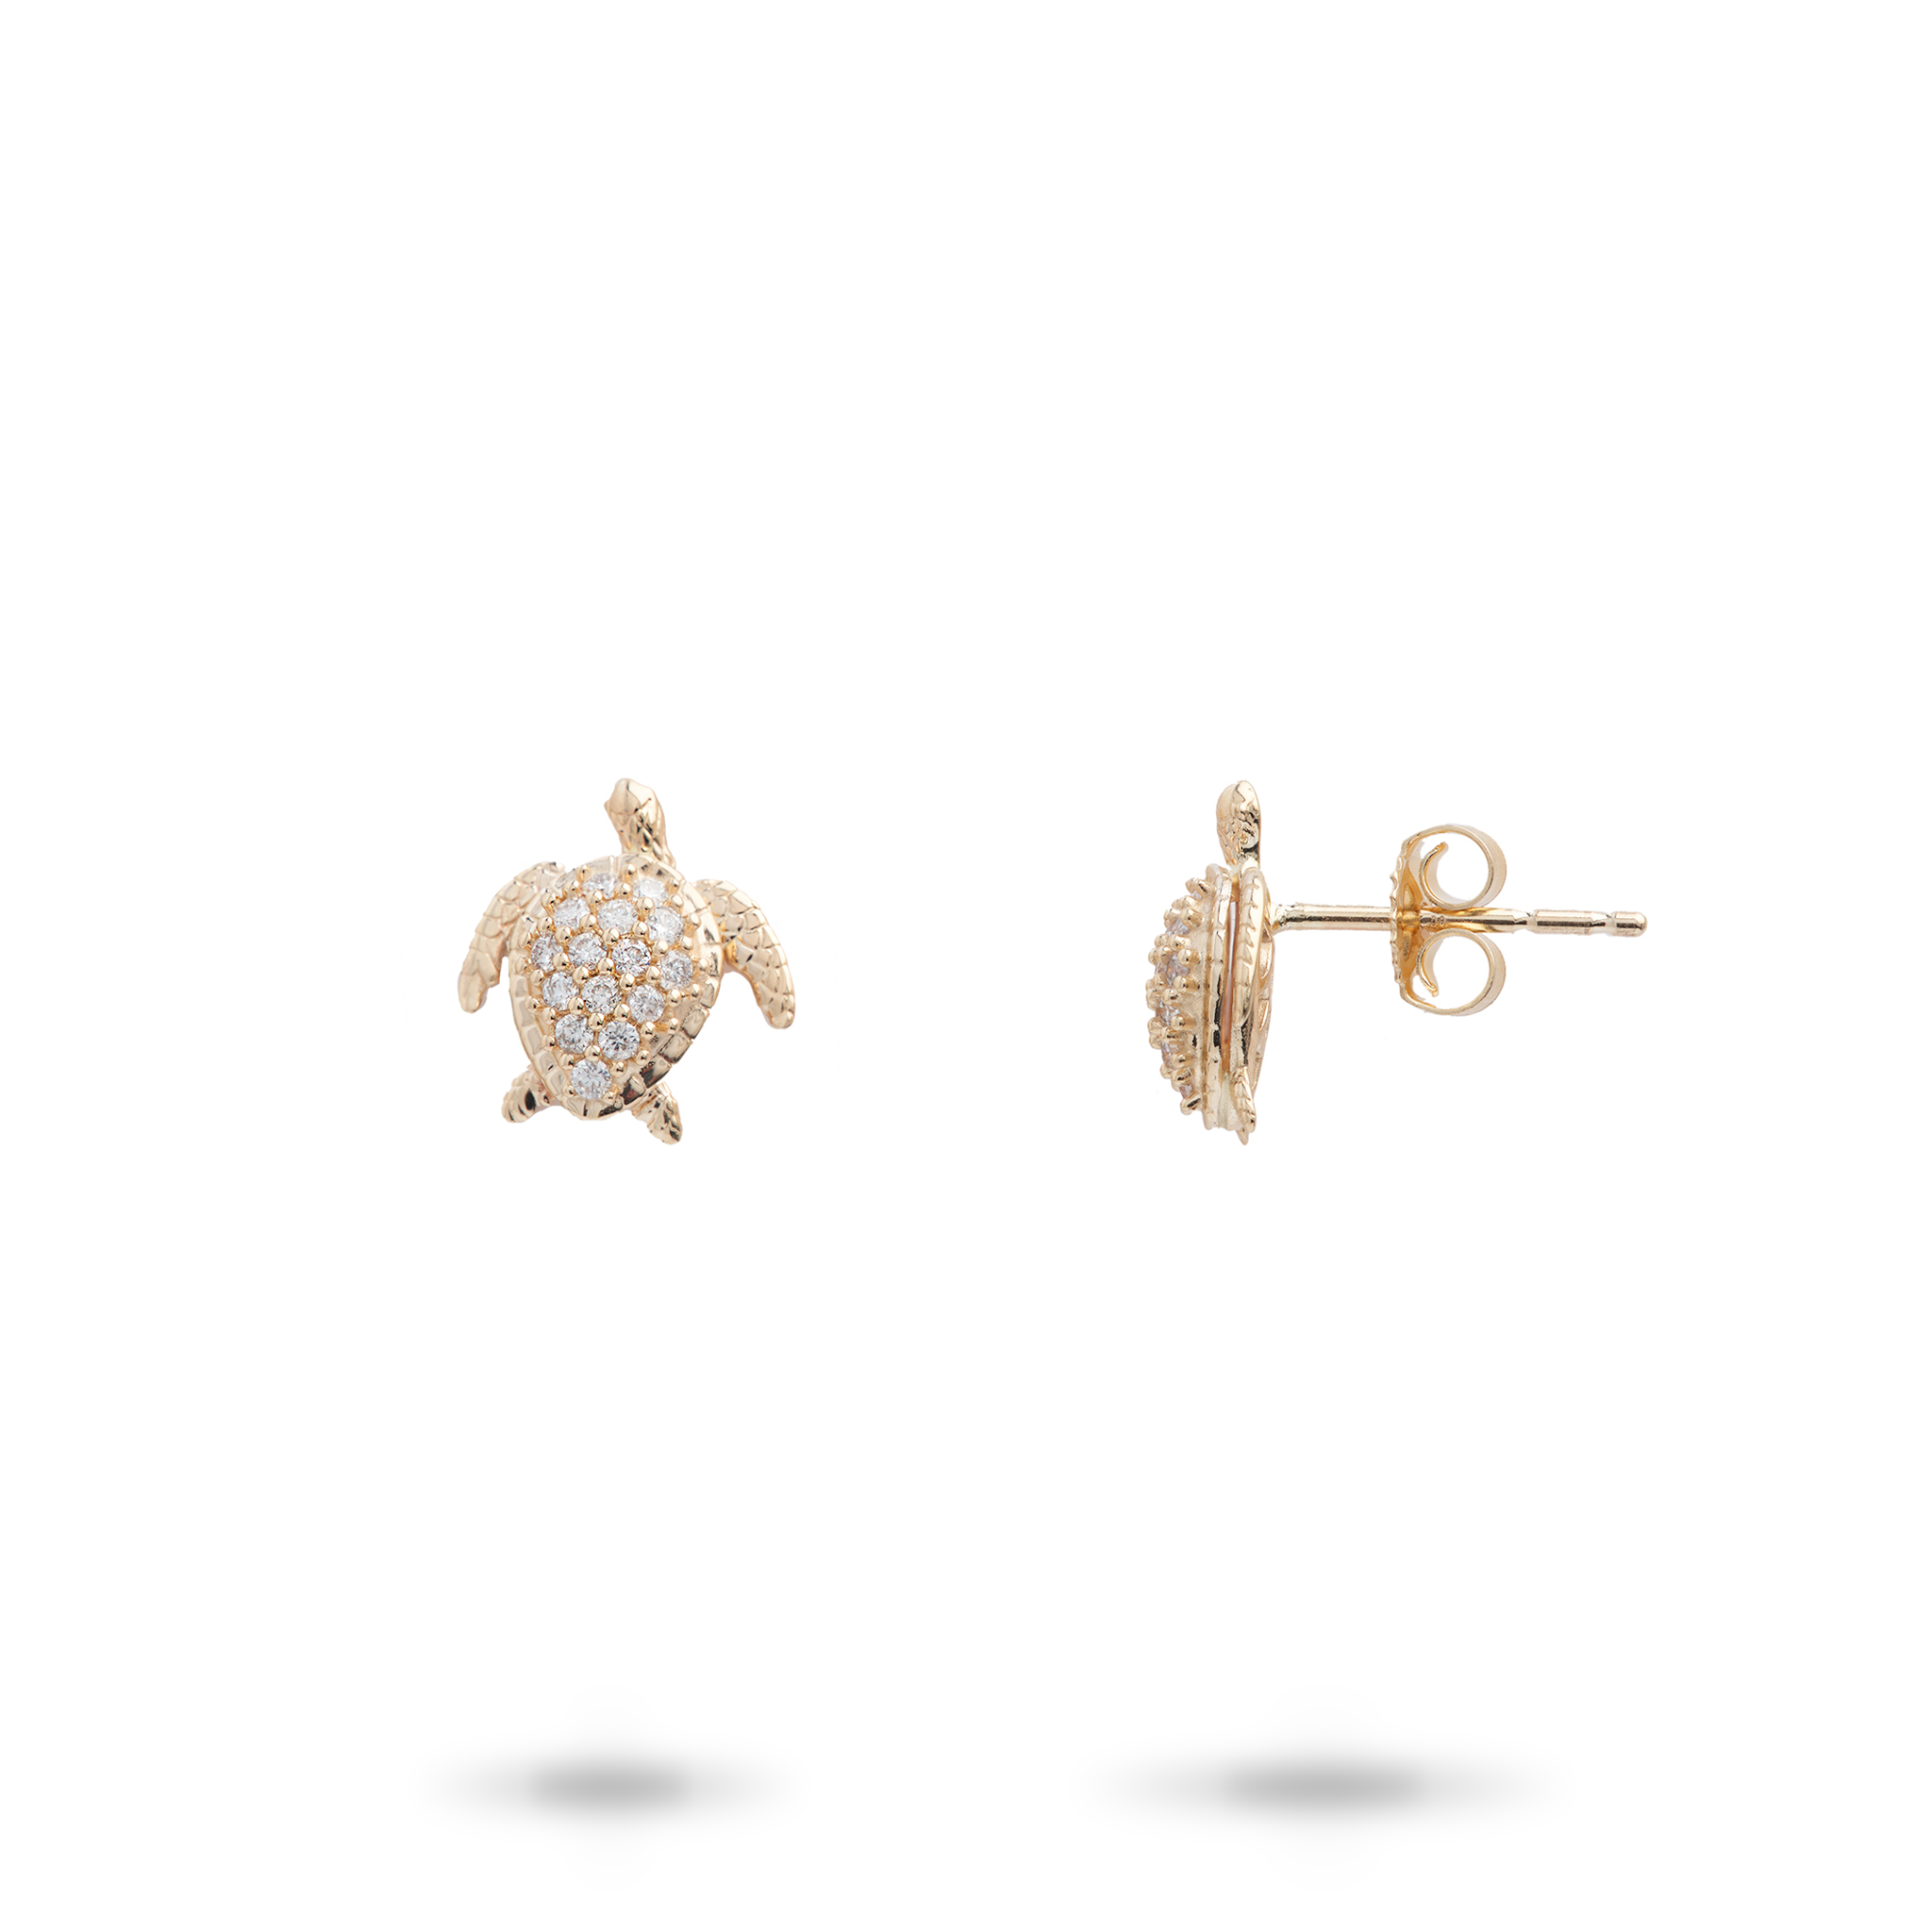 Honu Earrings in Gold with Diamonds - 10mm